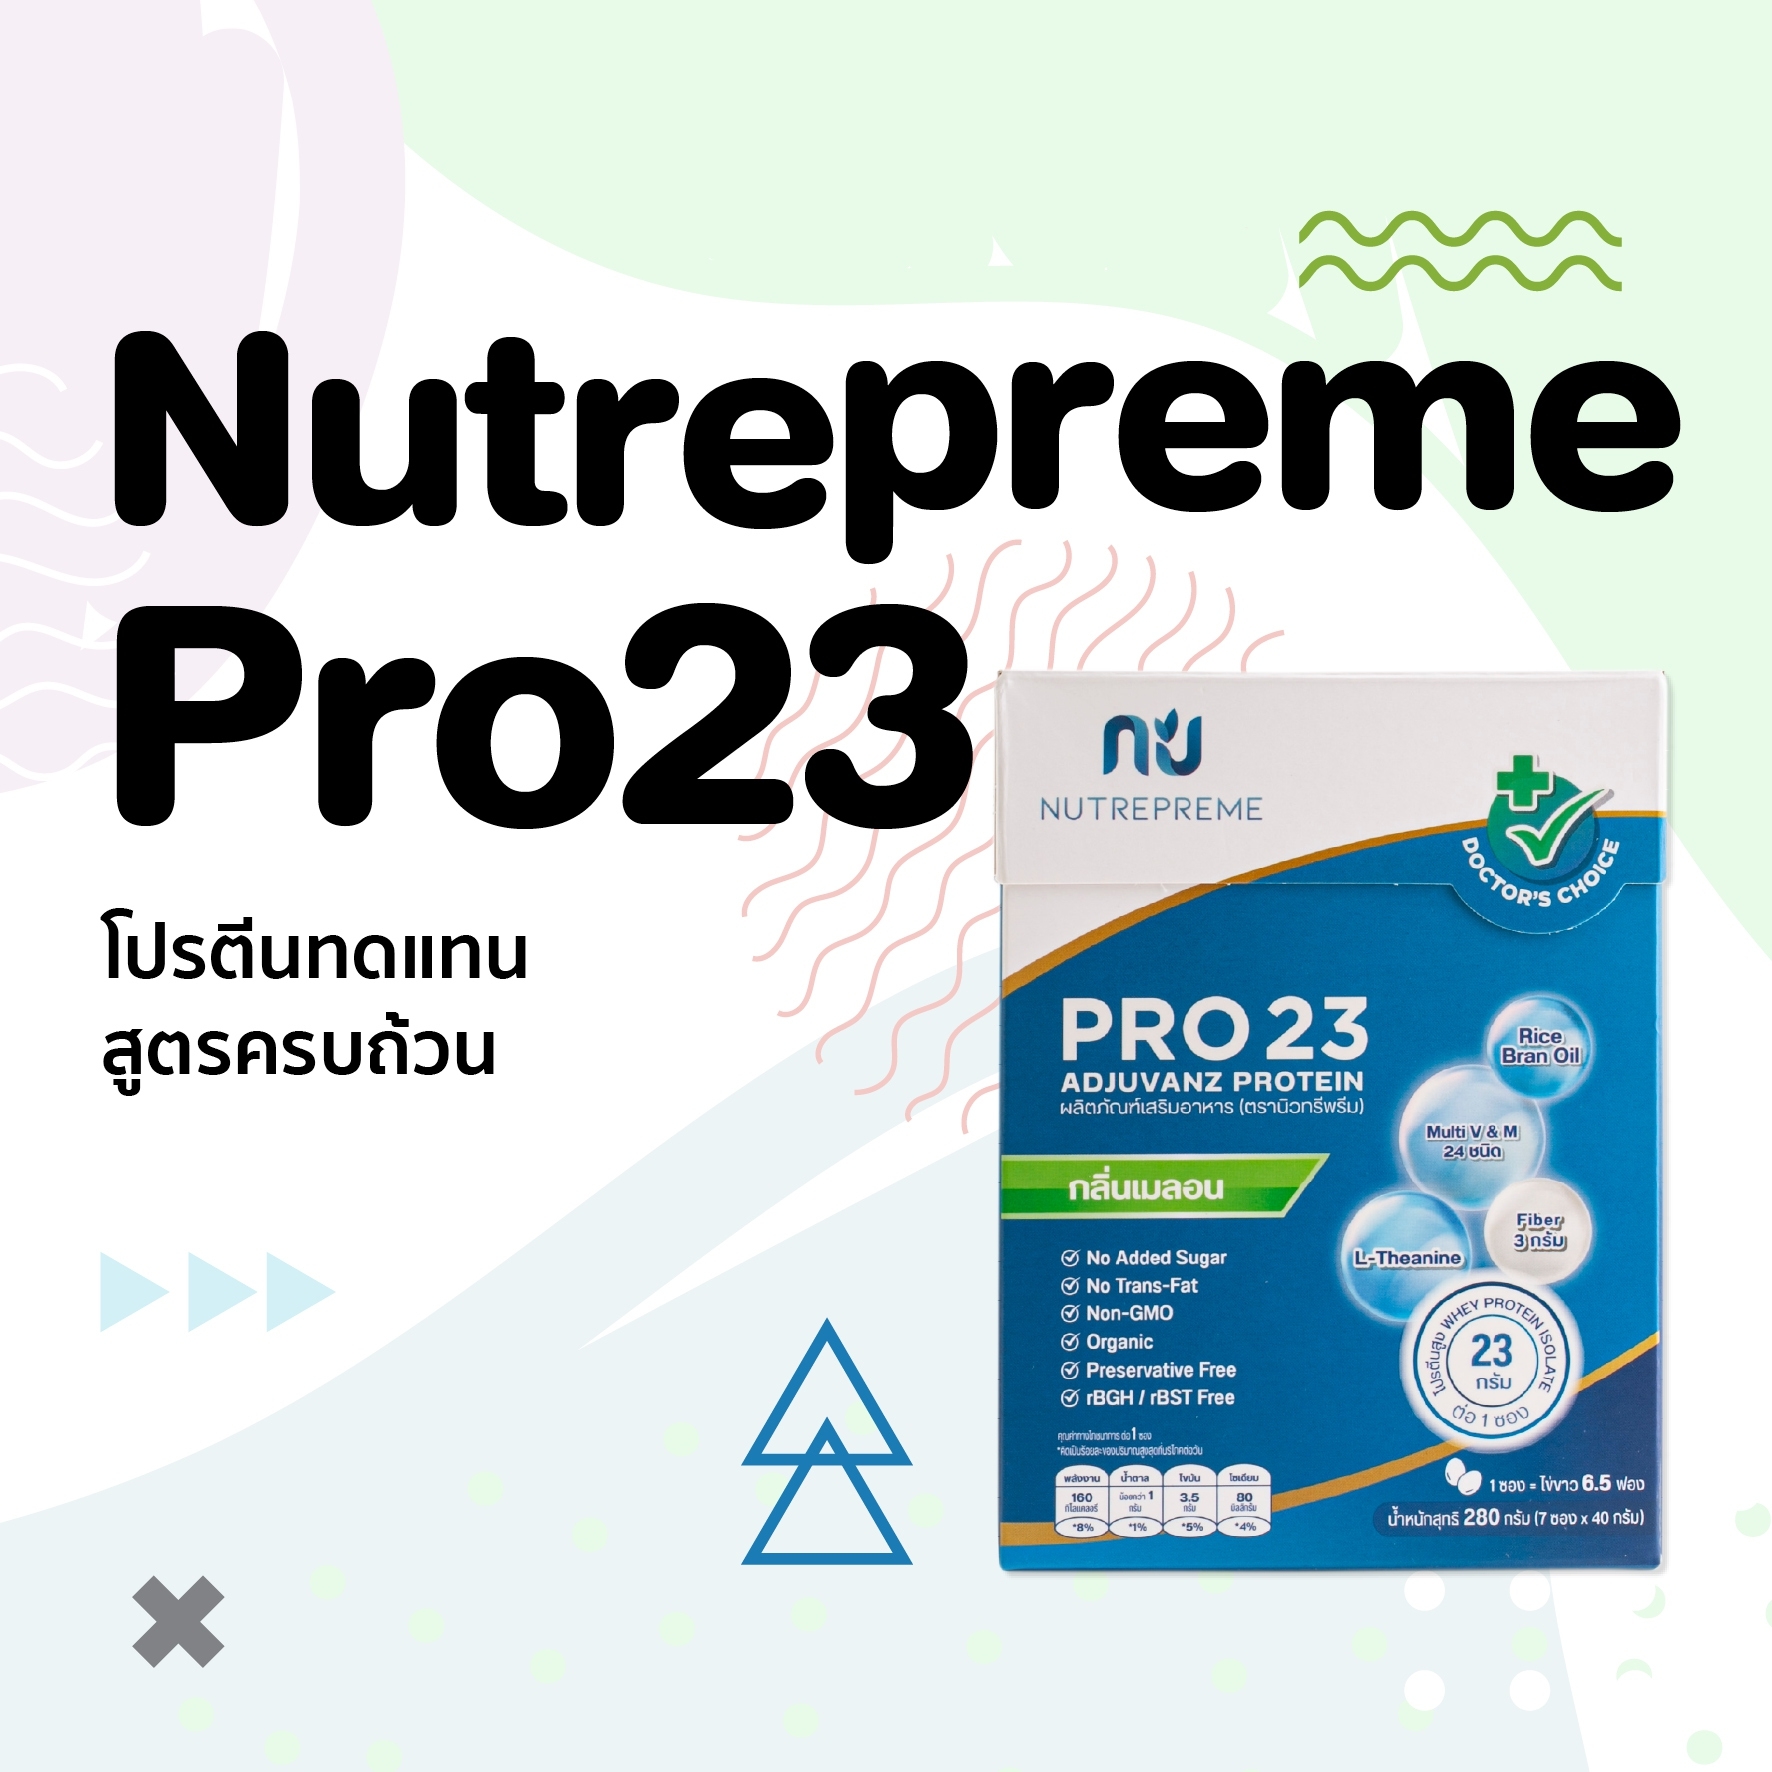 Nutrepreme Pro23 